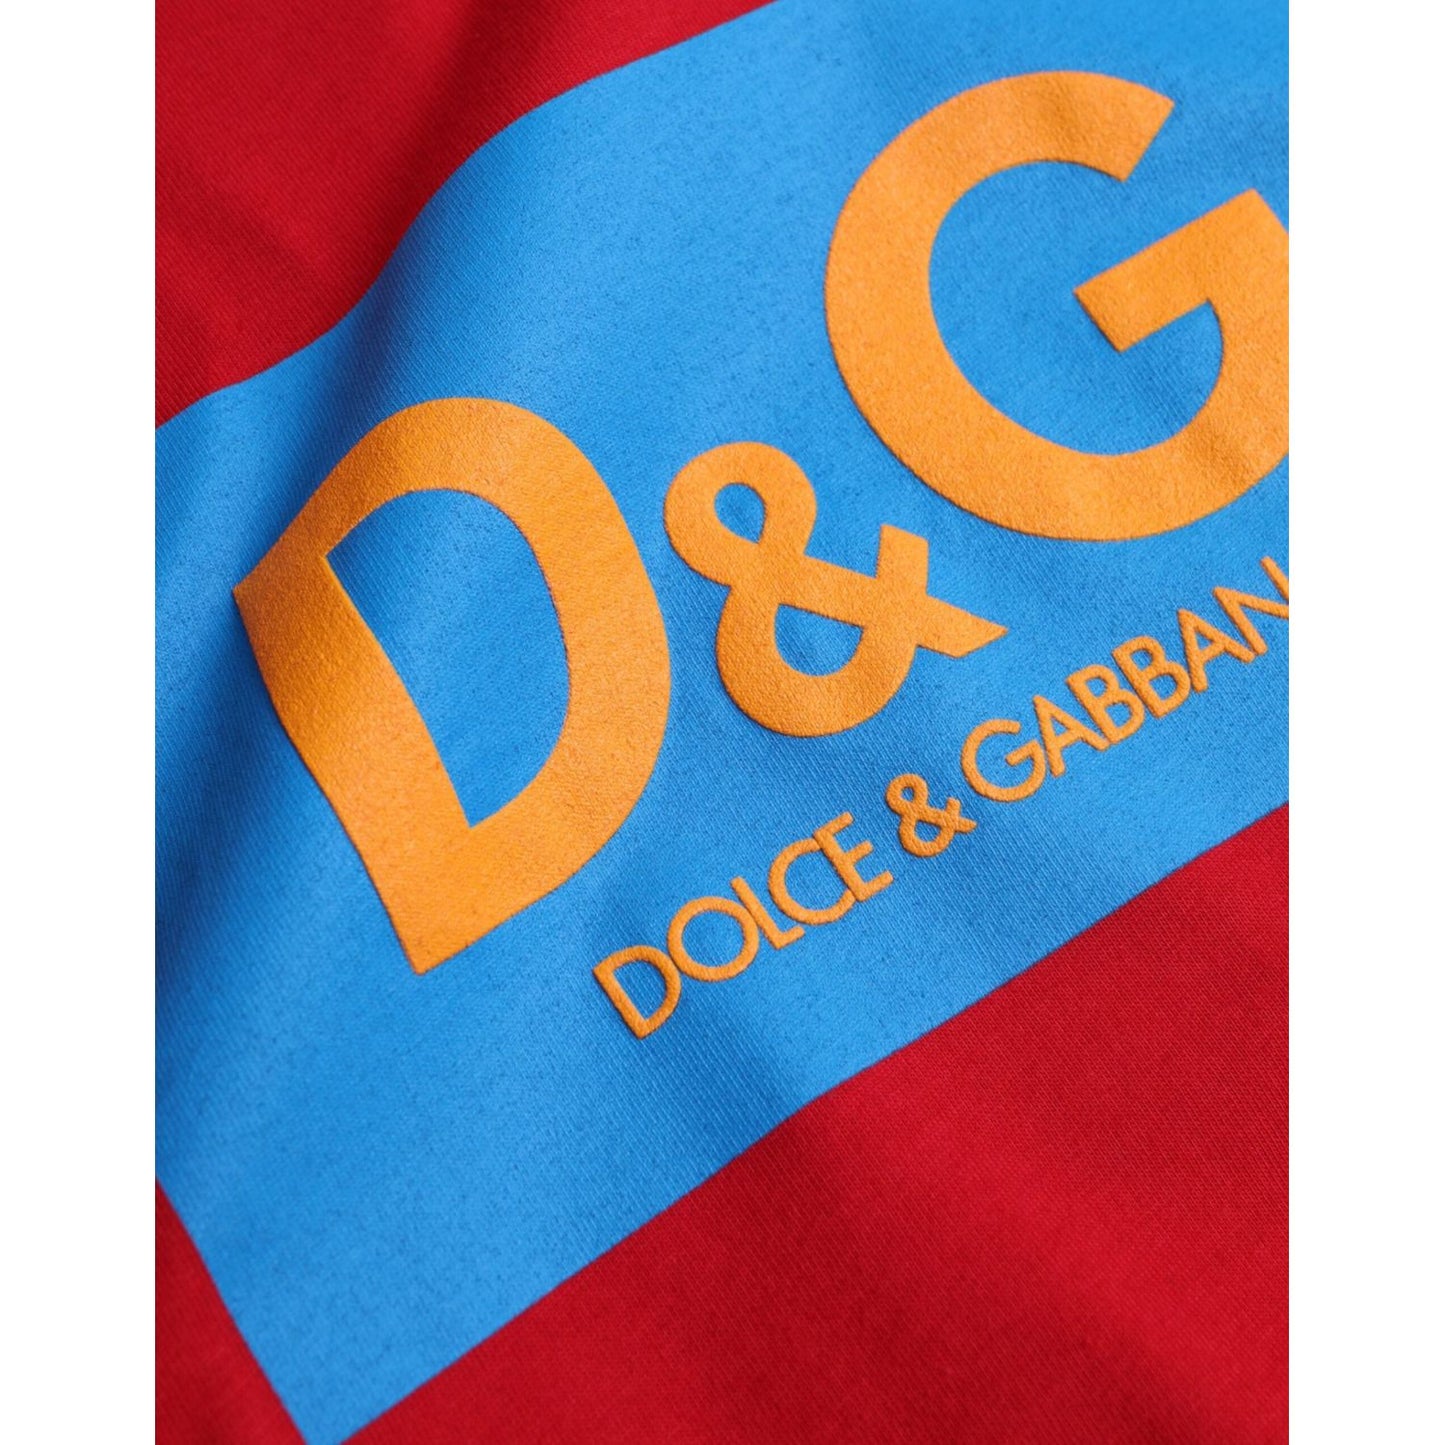 Dolce & Gabbana Red Logo Print Cotton Crew Neck T-shirt red-logo-print-cotton-crew-neck-t-shirt